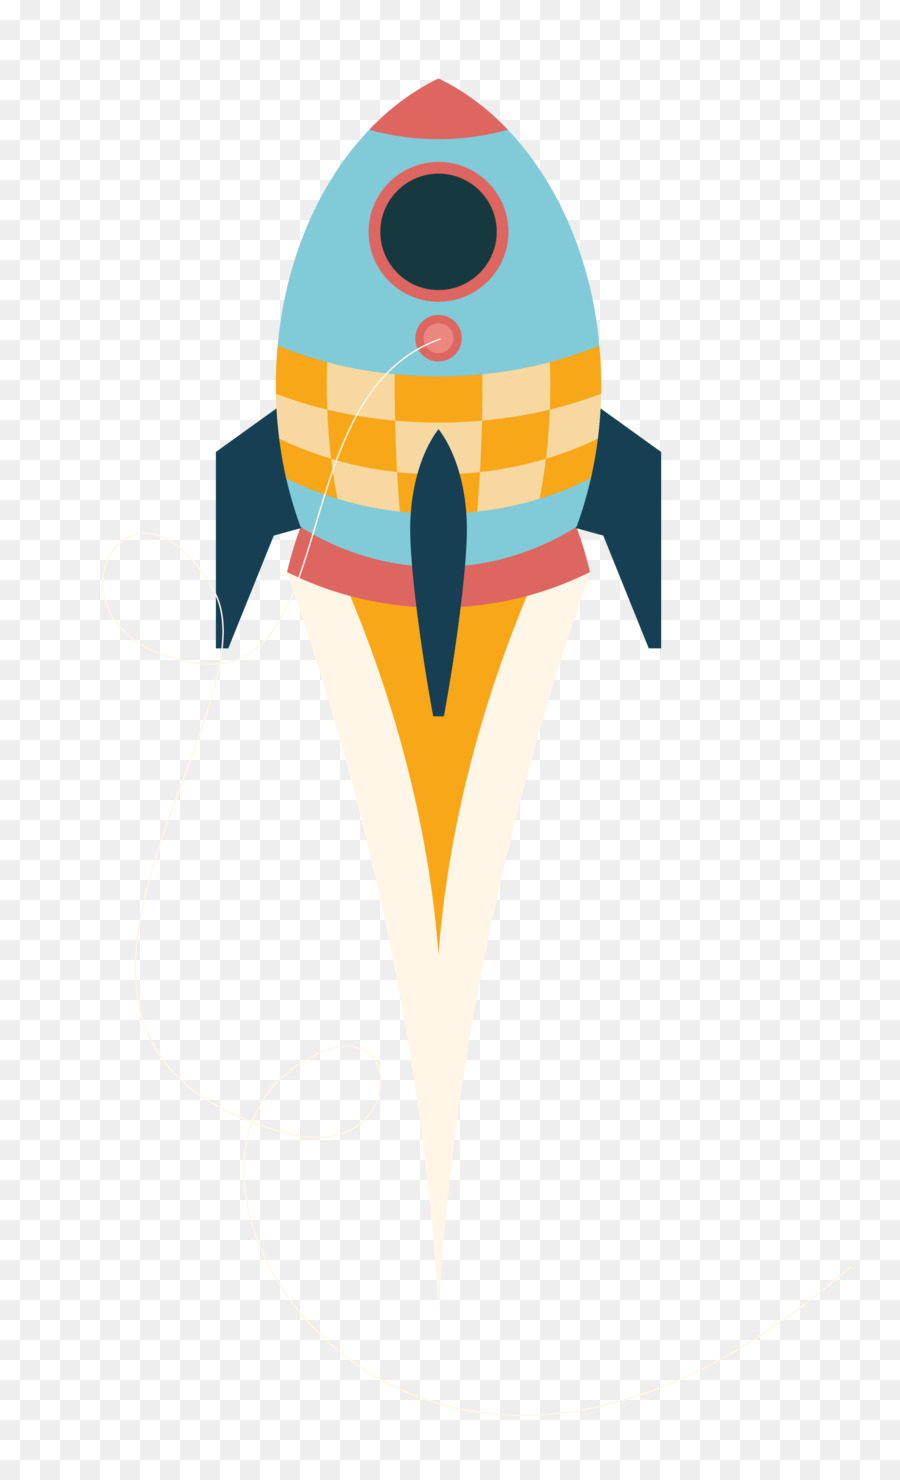 Rocket-Flachen design-Ikone - Flache Rakete